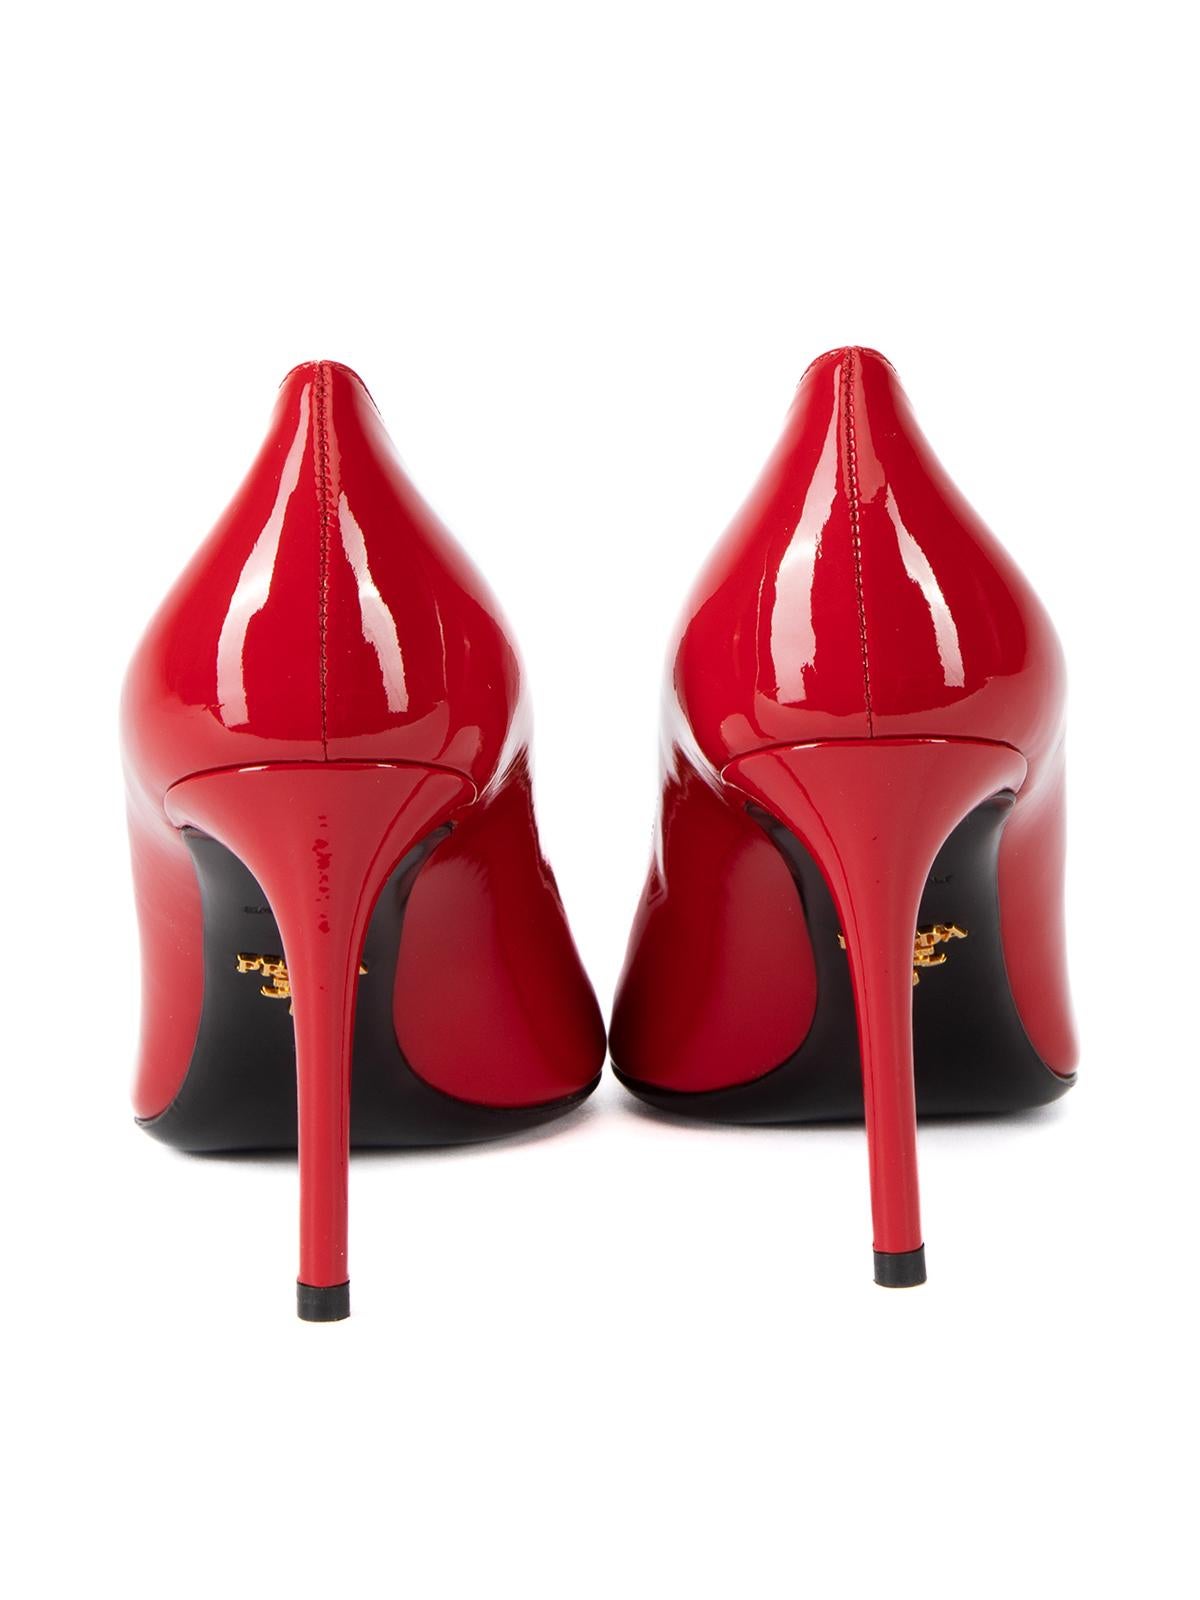 Prada Women's Calzature Donna Red Patent Leather Pumps 1